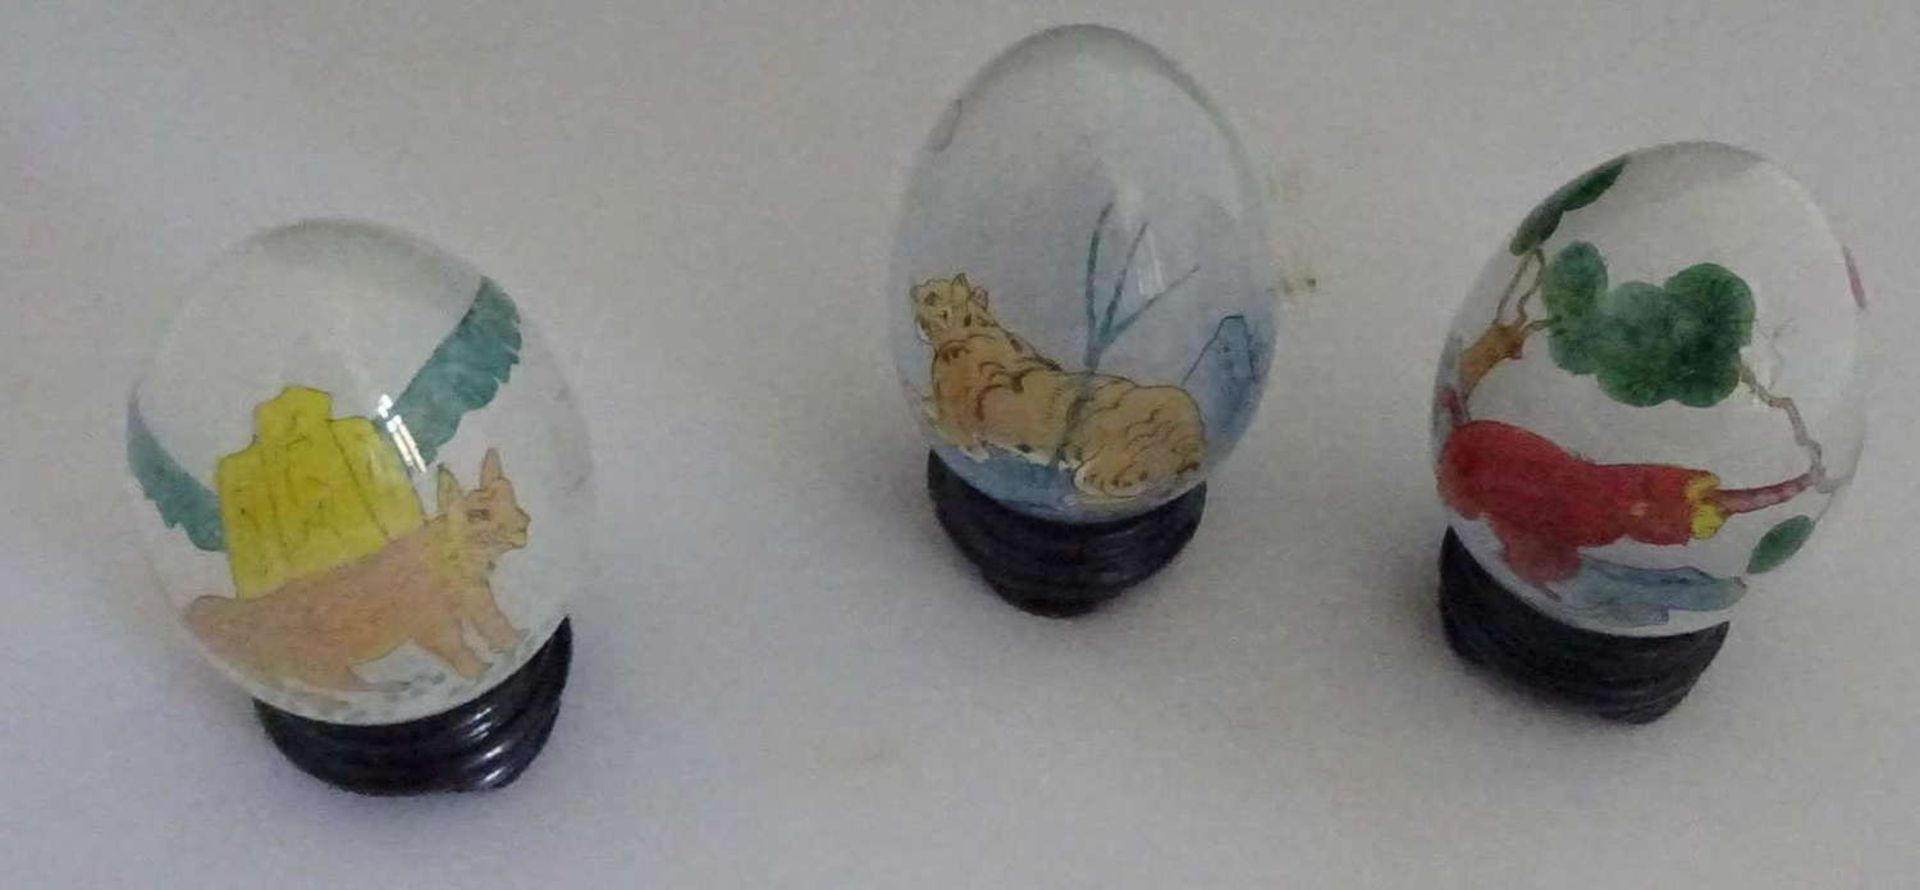 3 Glas Deko-Eier, Hinterglasmalerei. Verschiedene Motive. 3 glass decorative eggs, reverse glass